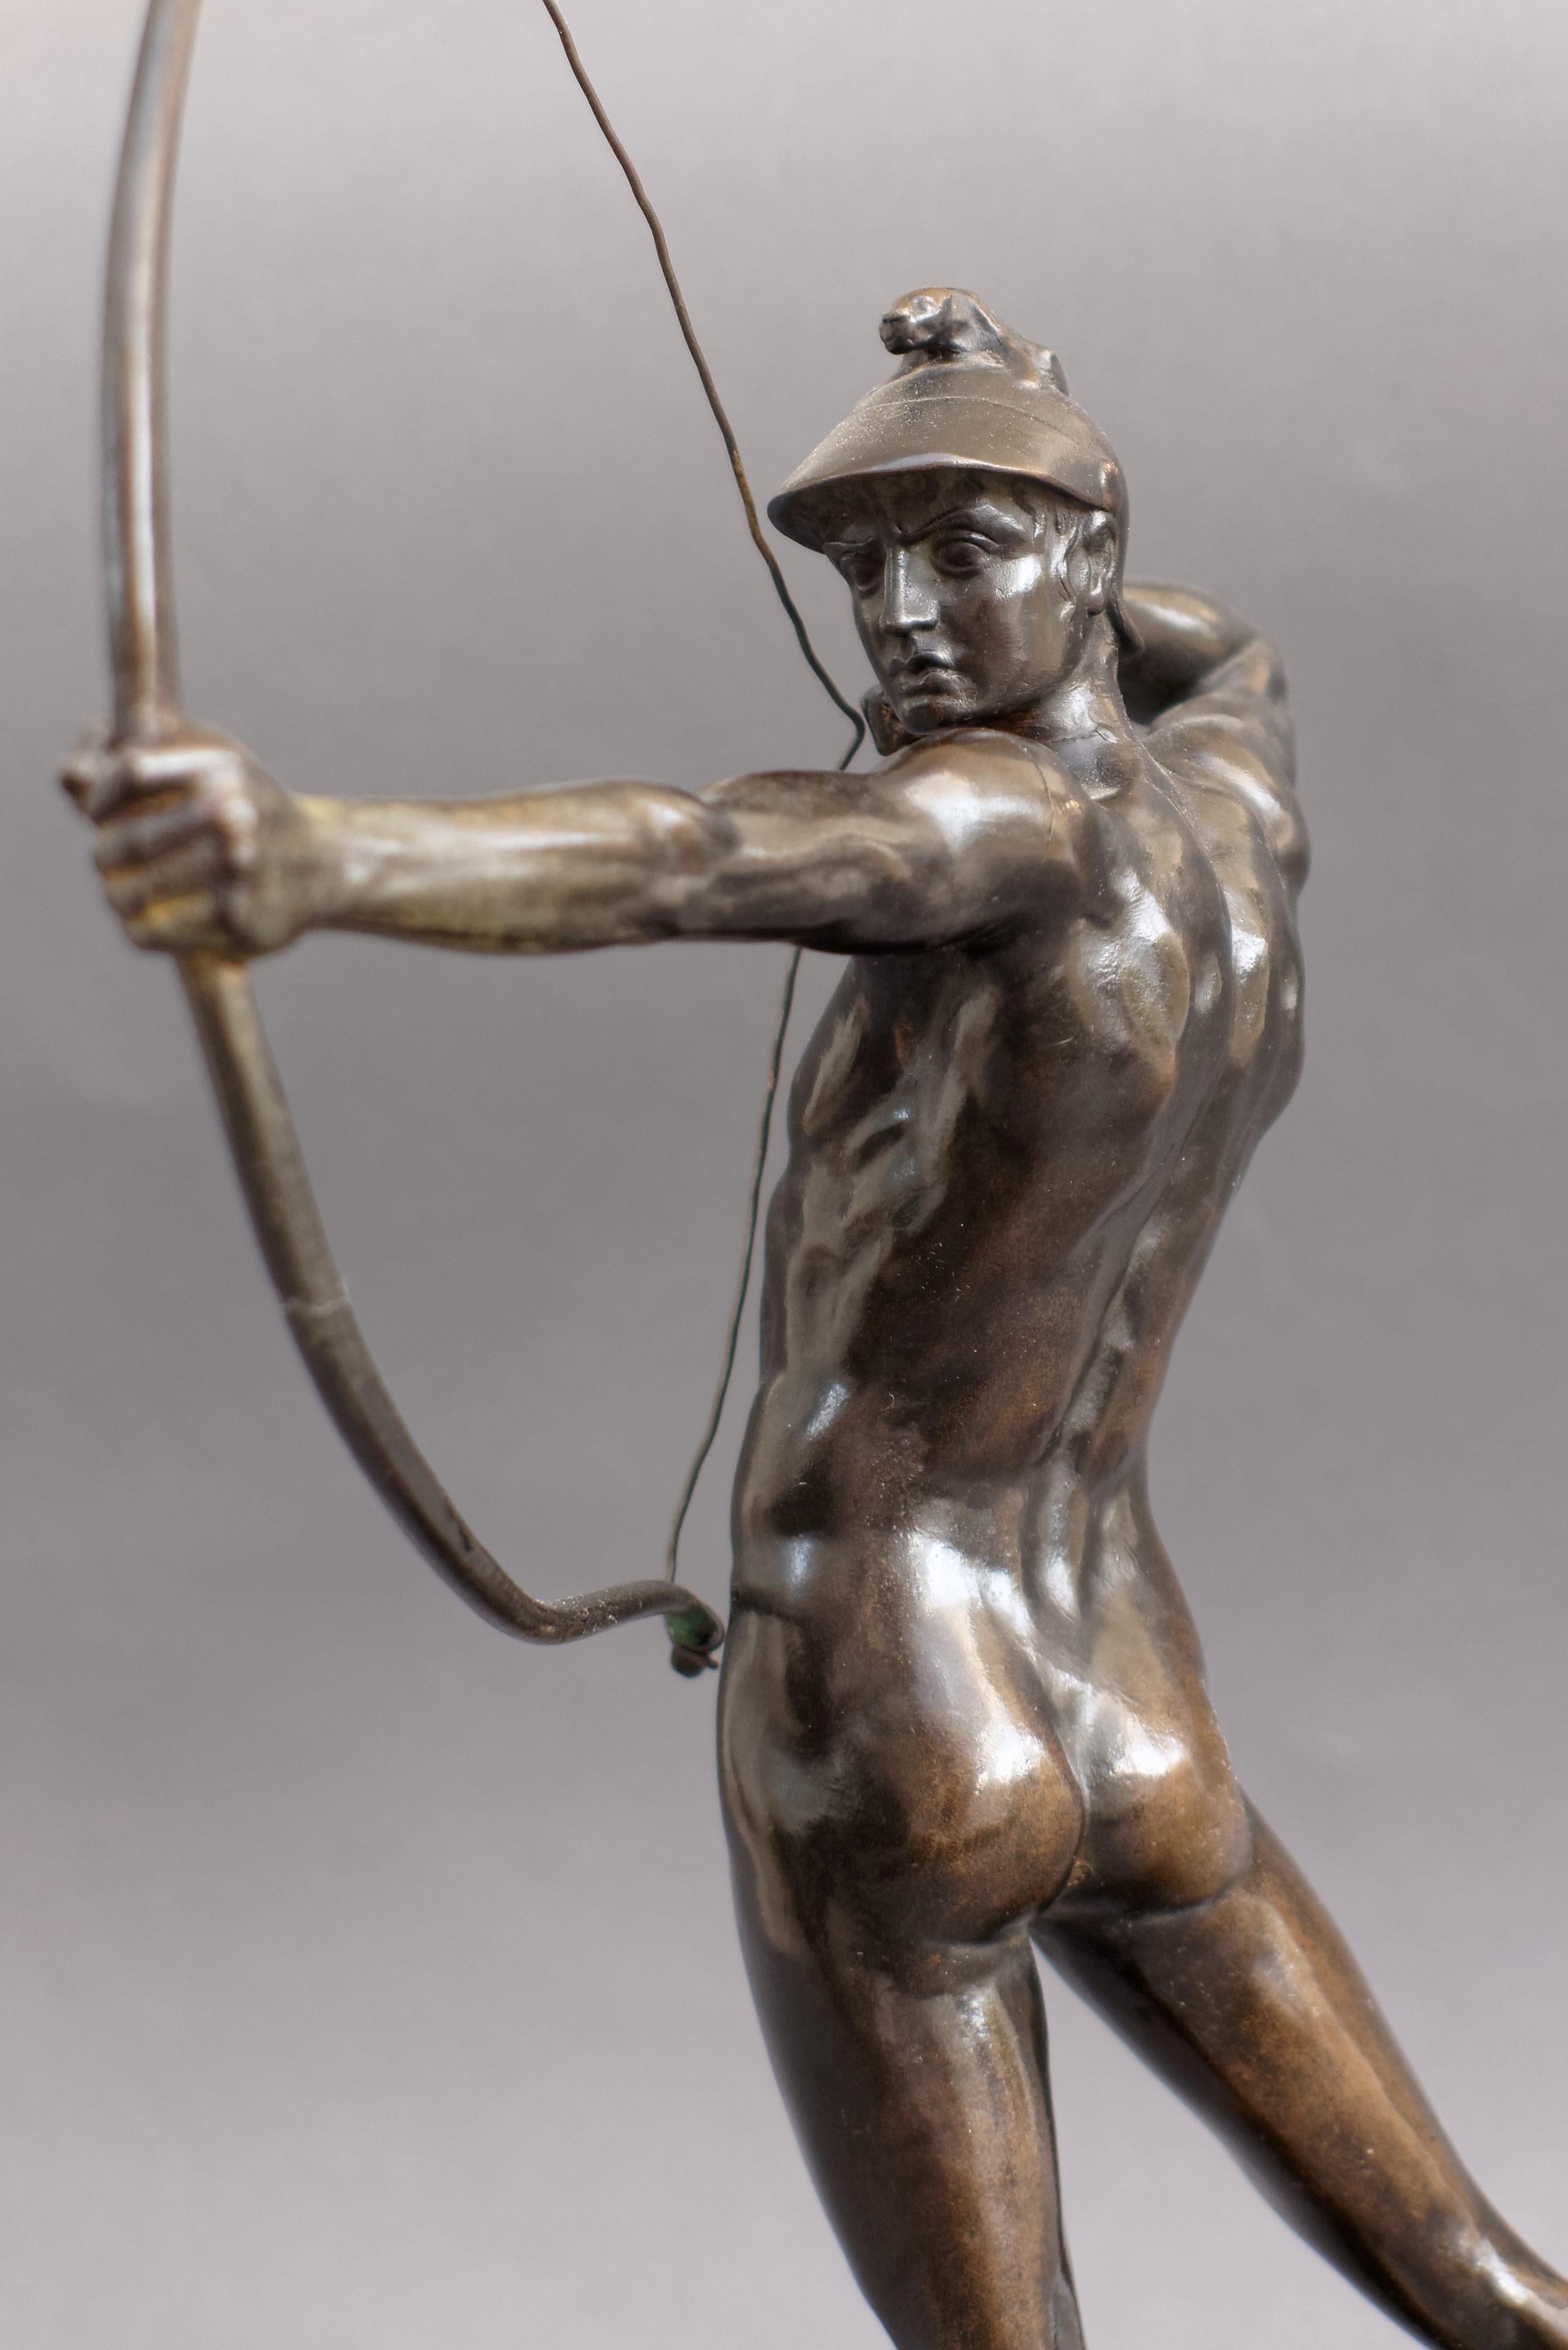 Painted German Bronze Male Nude Figure 'The Archer' by Ernst Moritz Geyger, Berlin